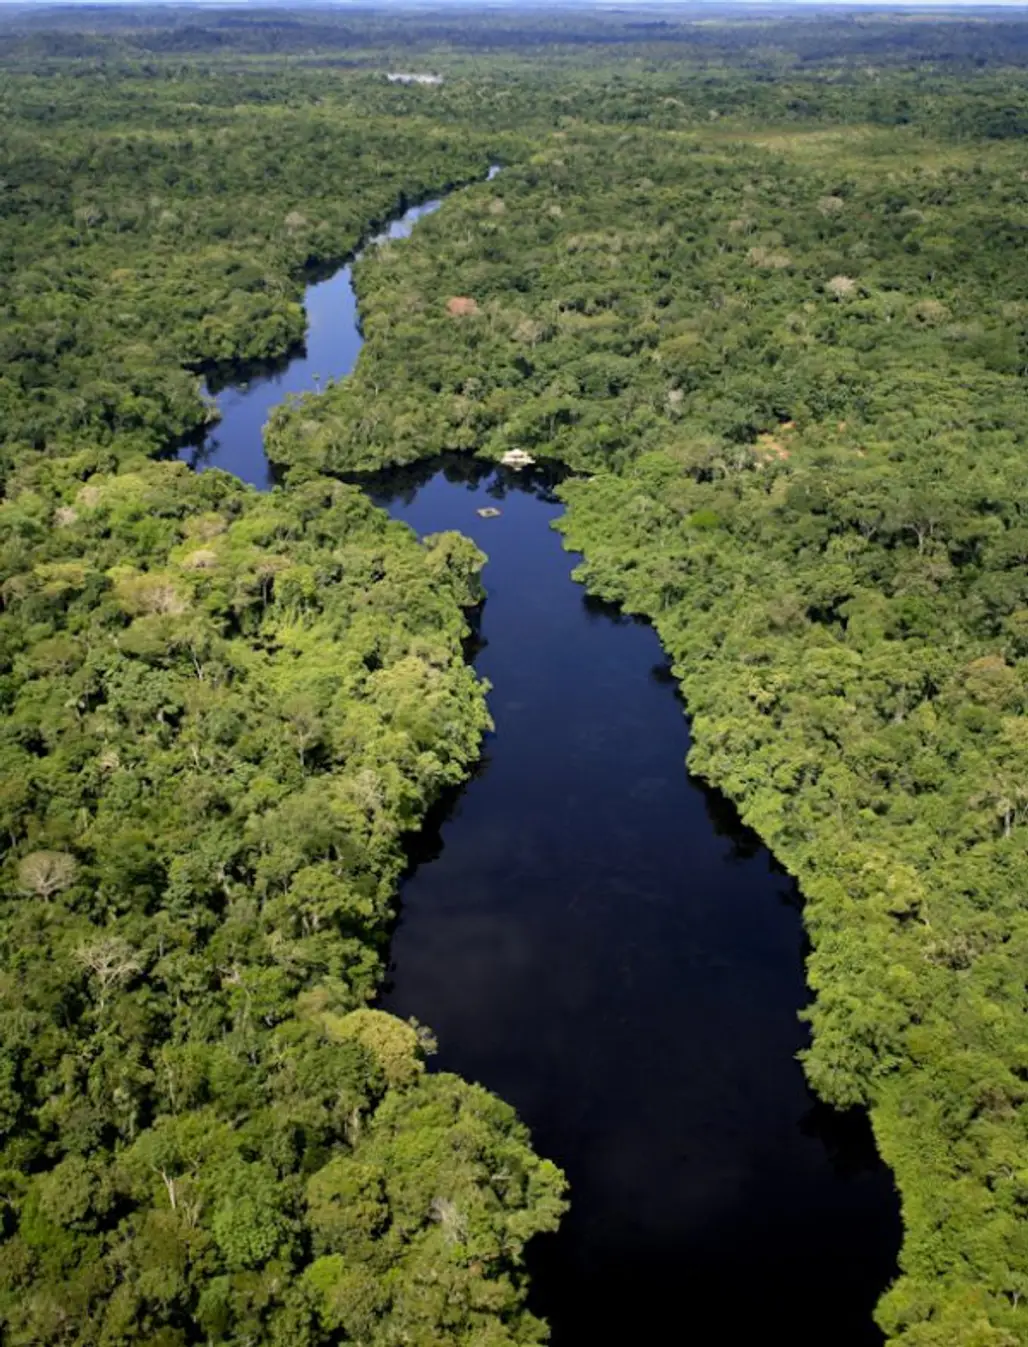 Amazon River and Rainforest, Brazil